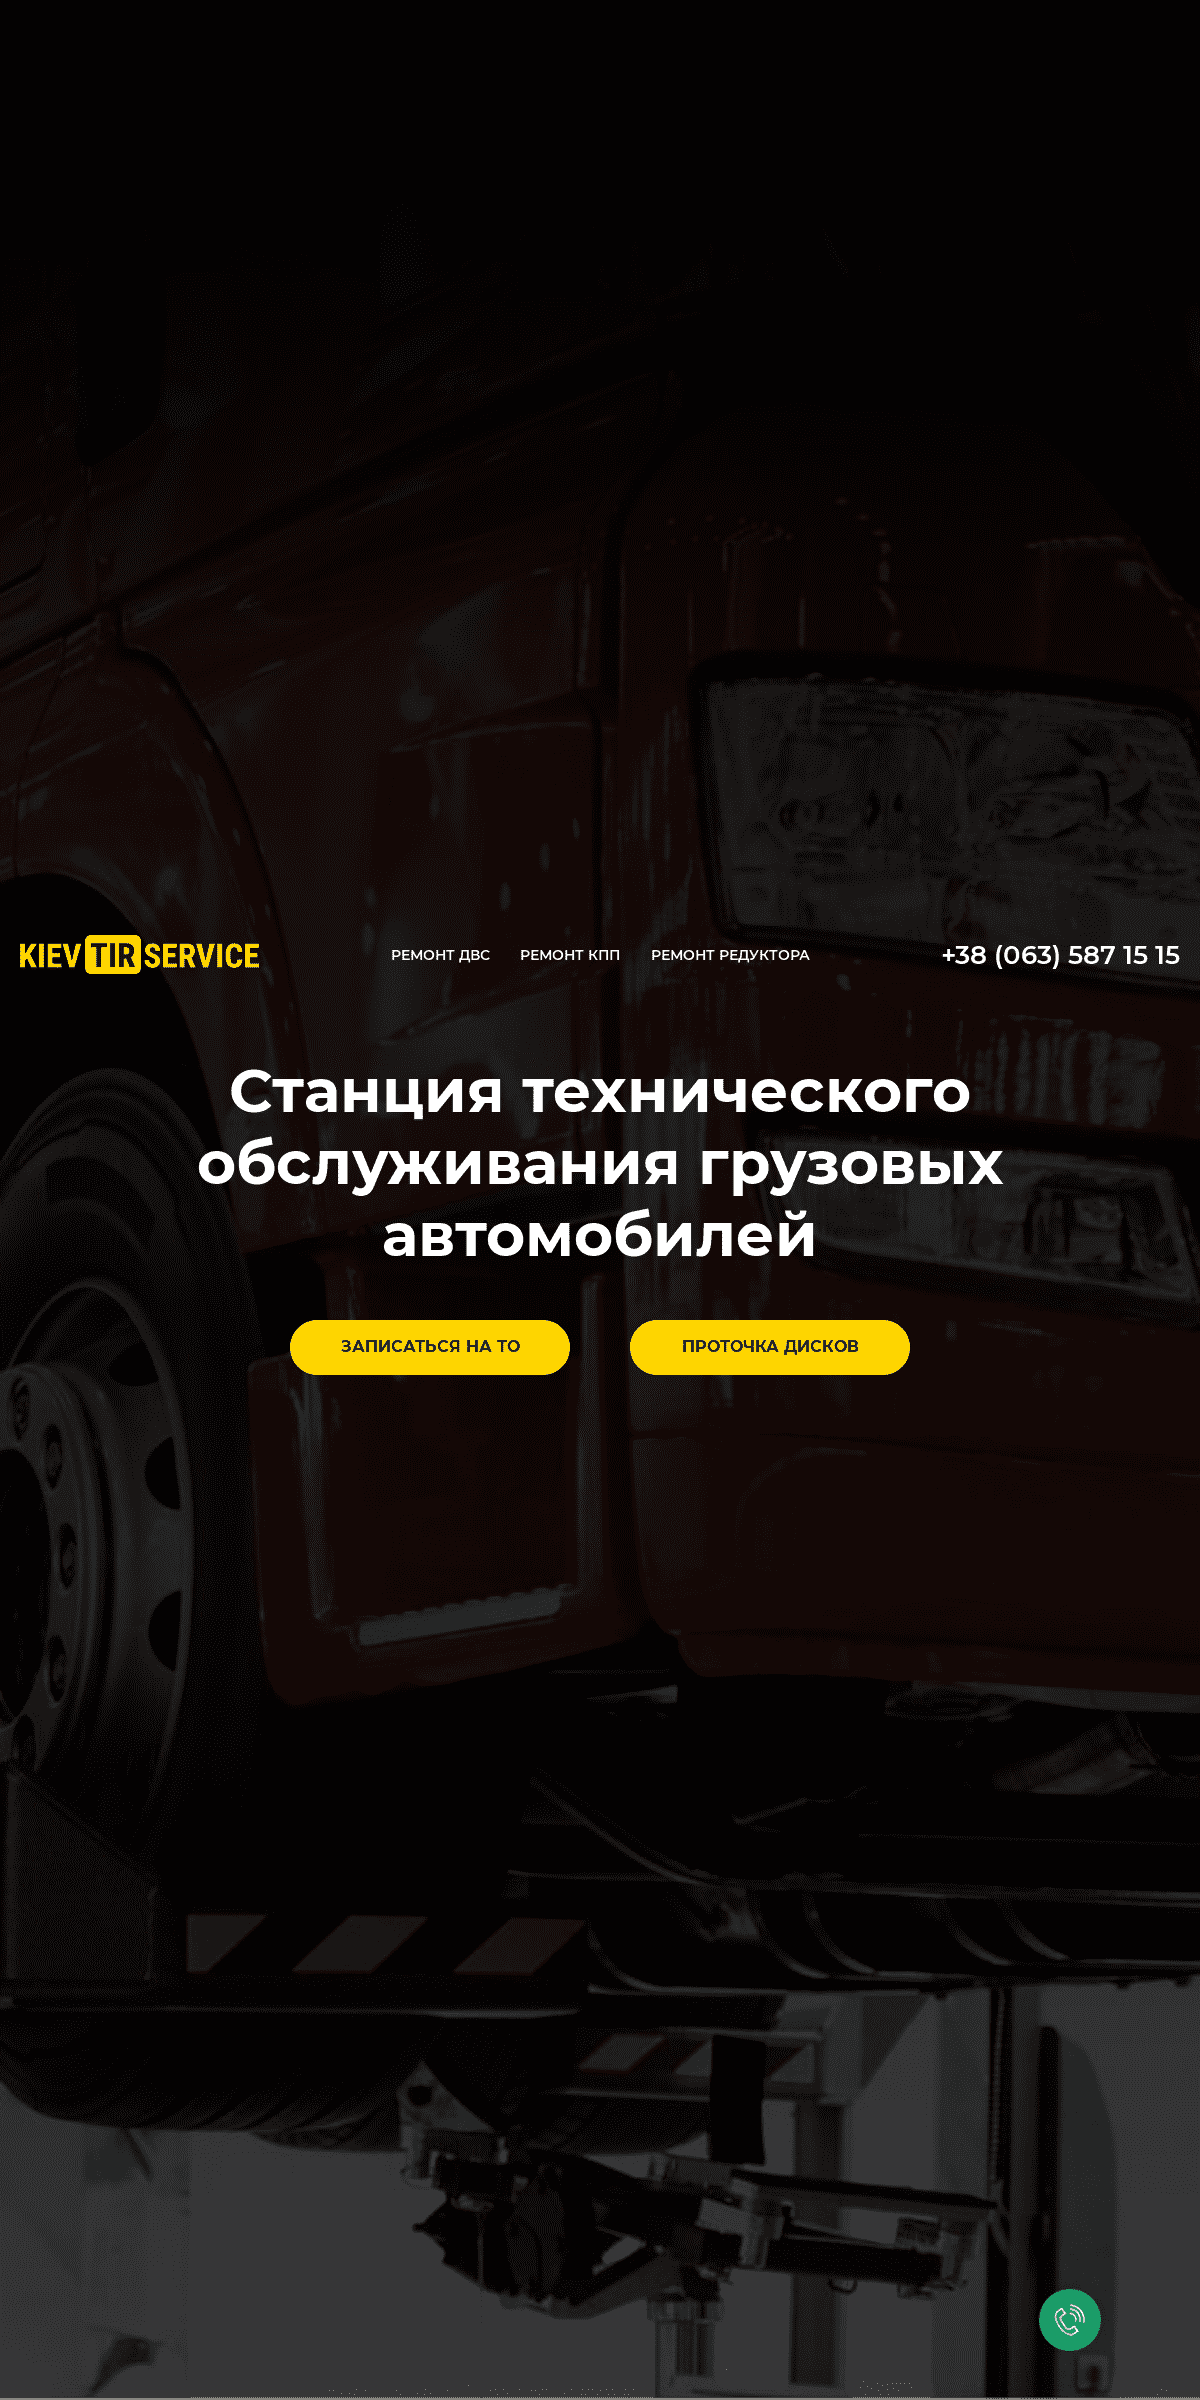 A complete backup of kievtirservice.com.ua